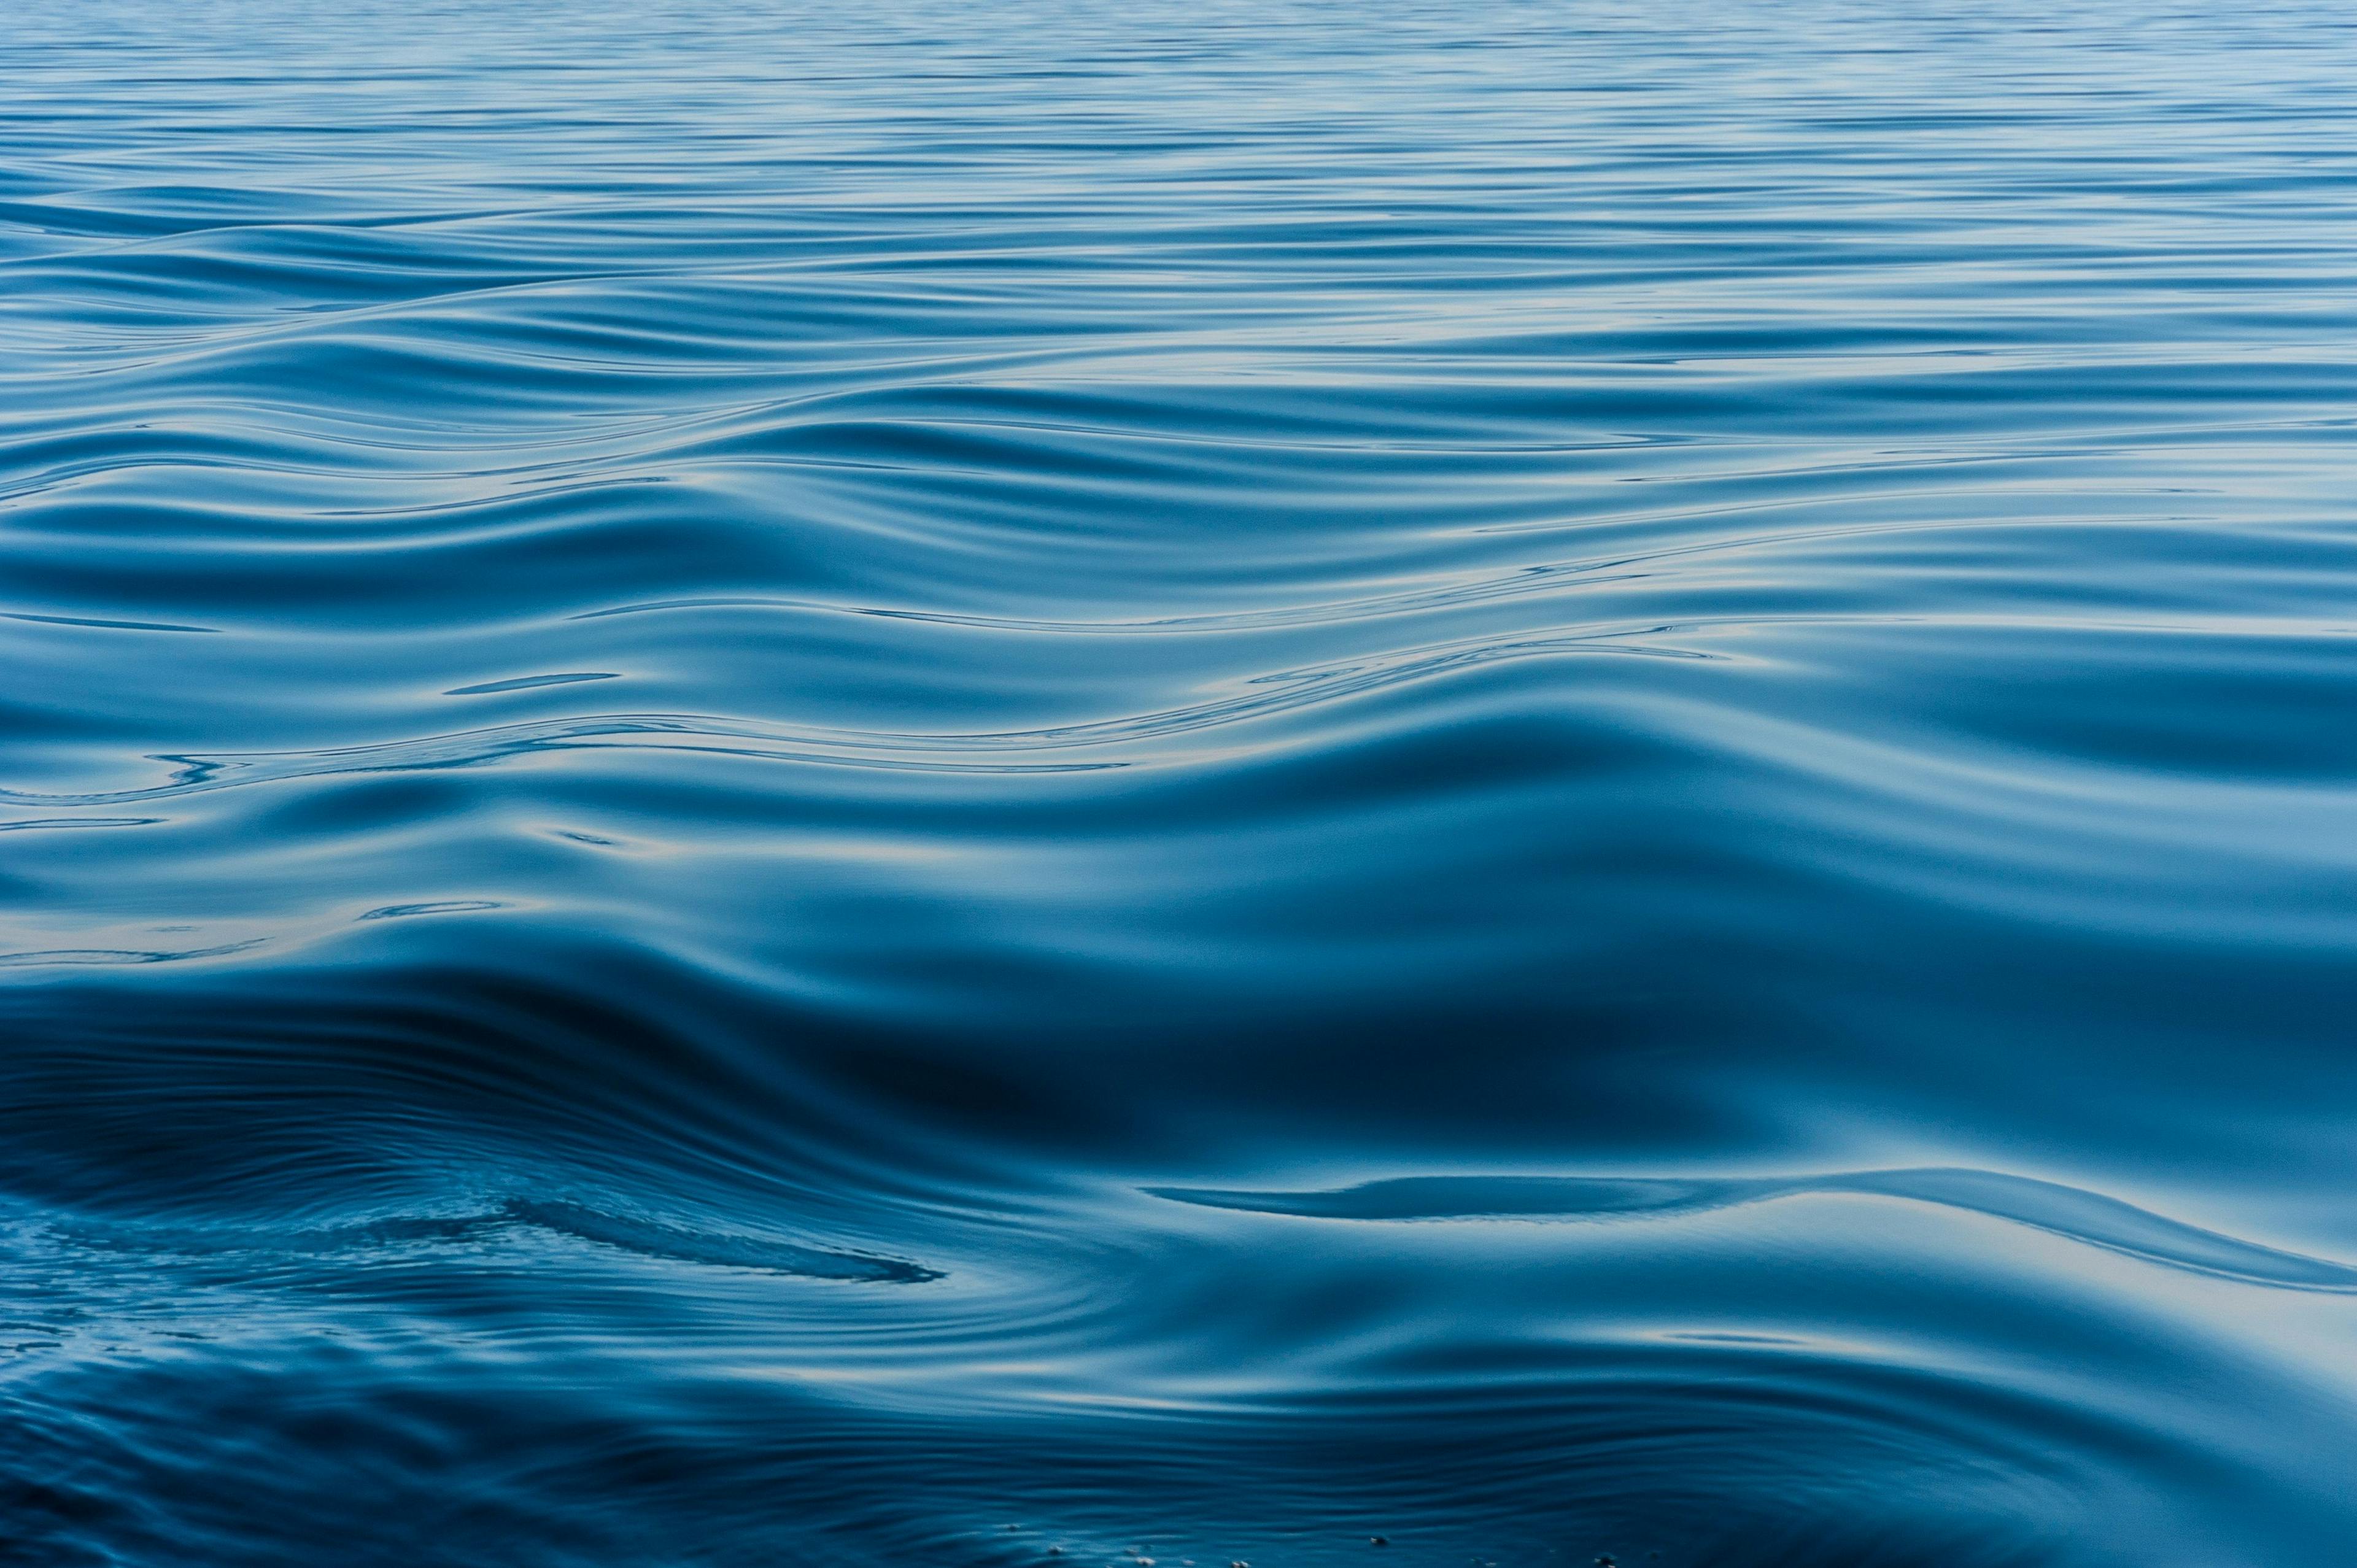 wave on the surface of the lake | Image Credit: © tashas - stock.adobe.com